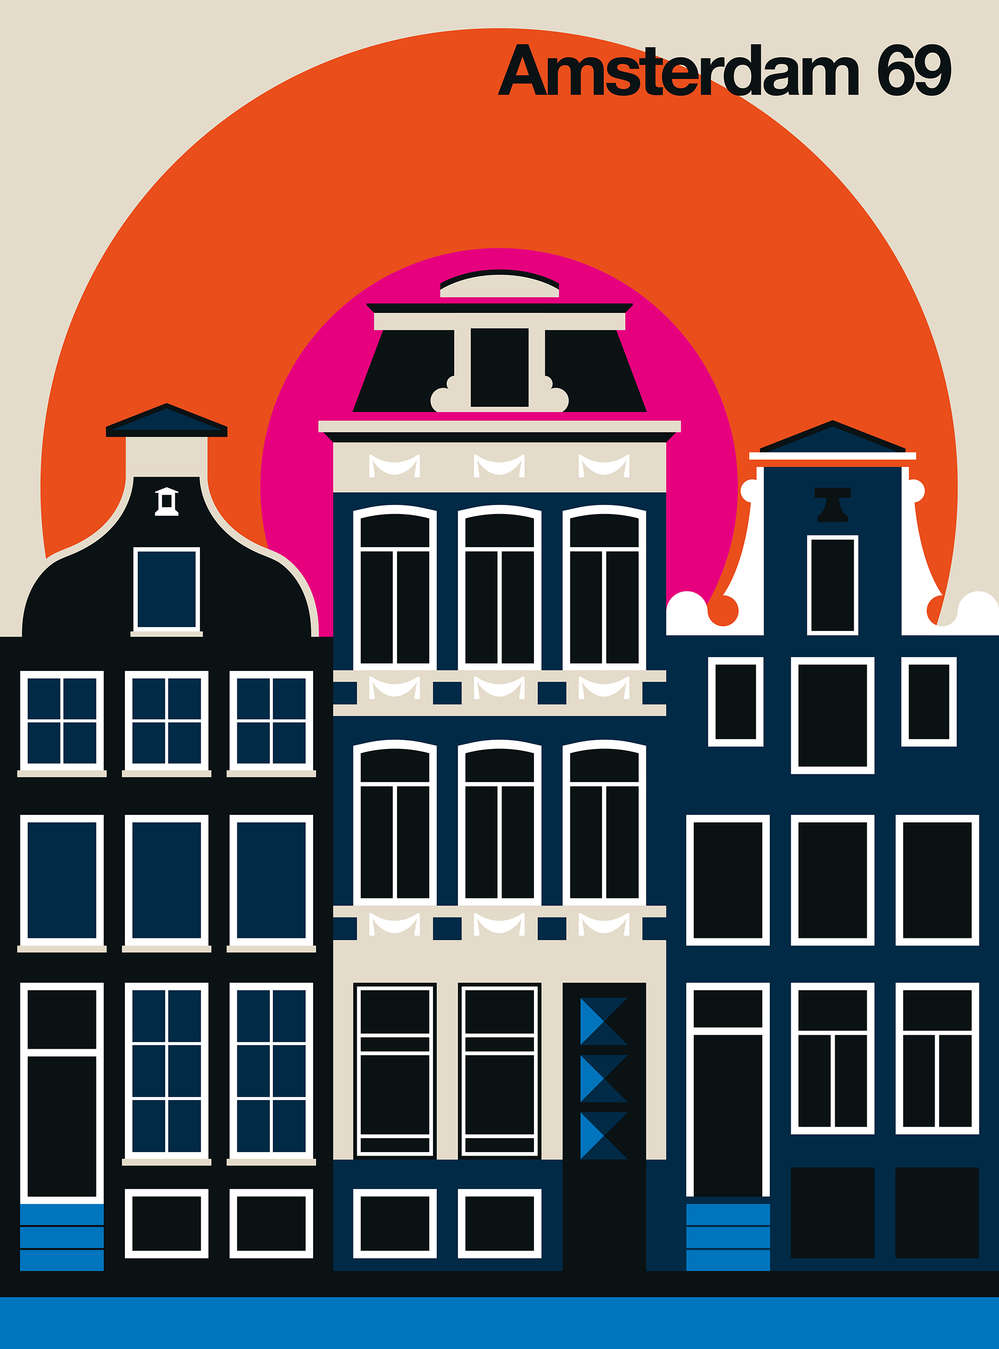             Fototapete Amsterdam Häuserfronten im Retro Design
        